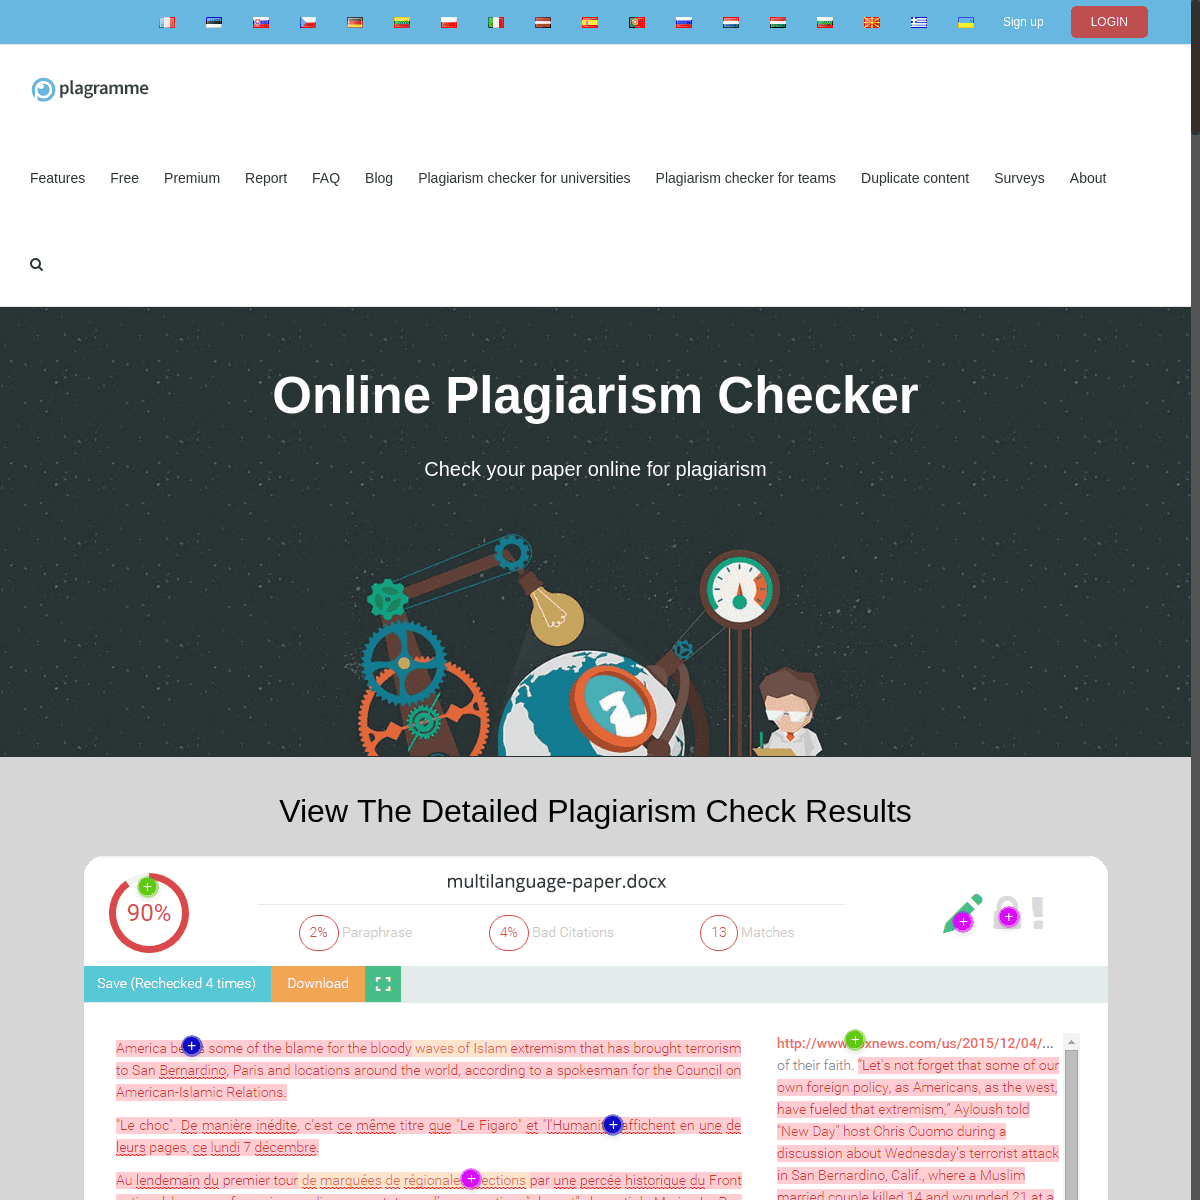 Plagiarism Checker - Plagramme